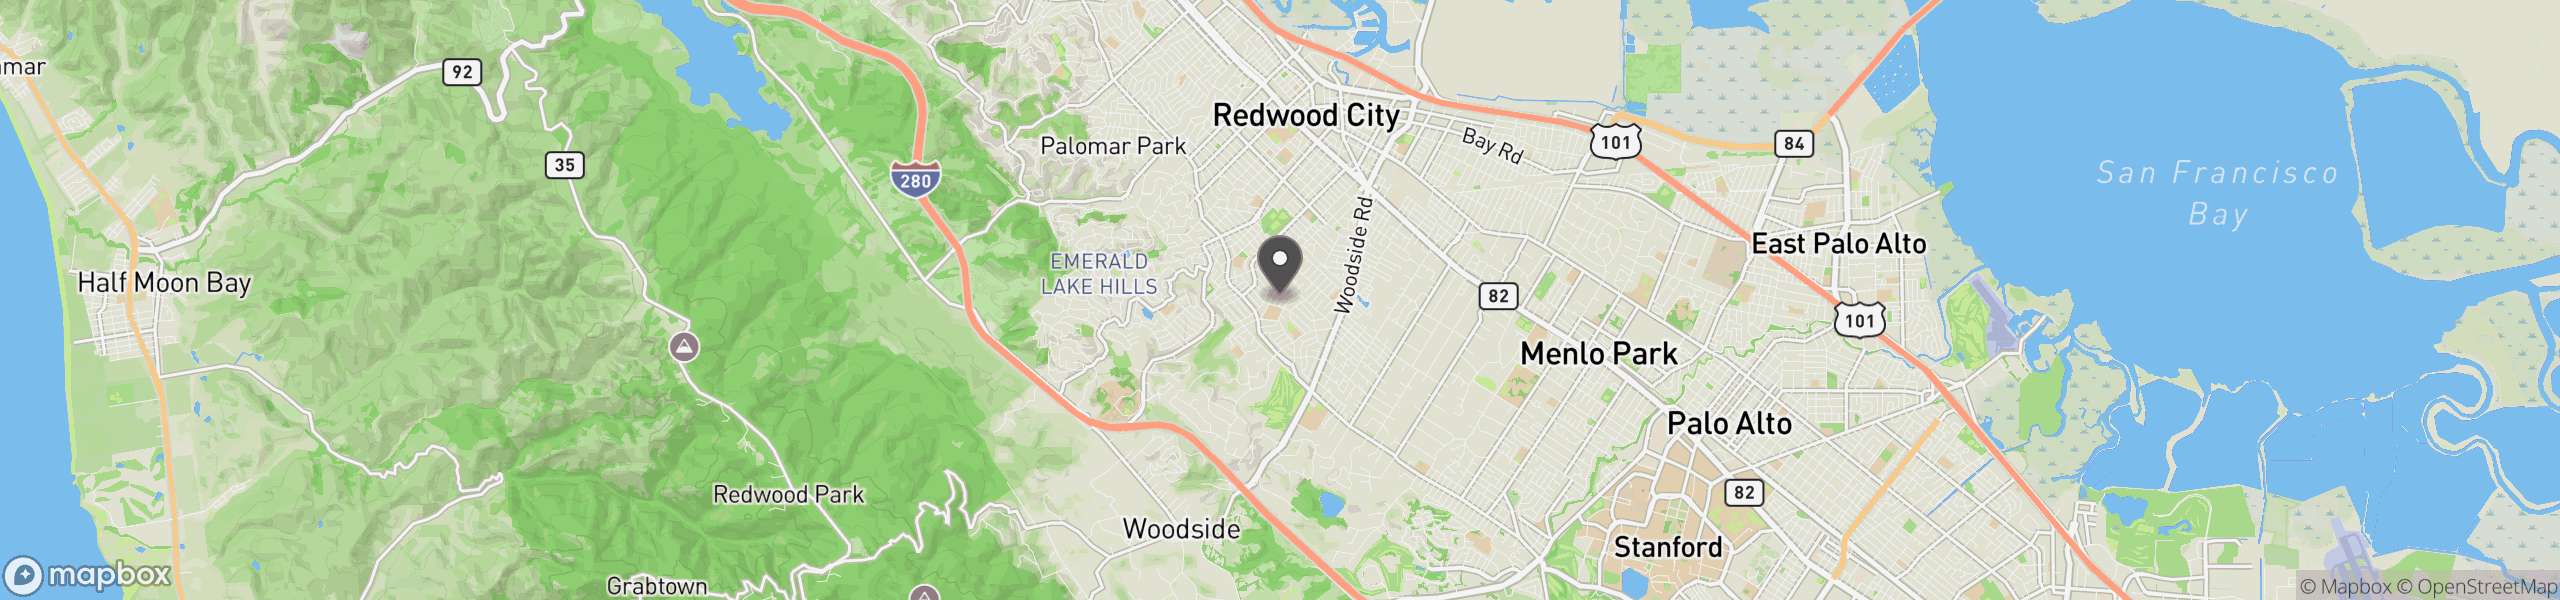 Redwood City, CA